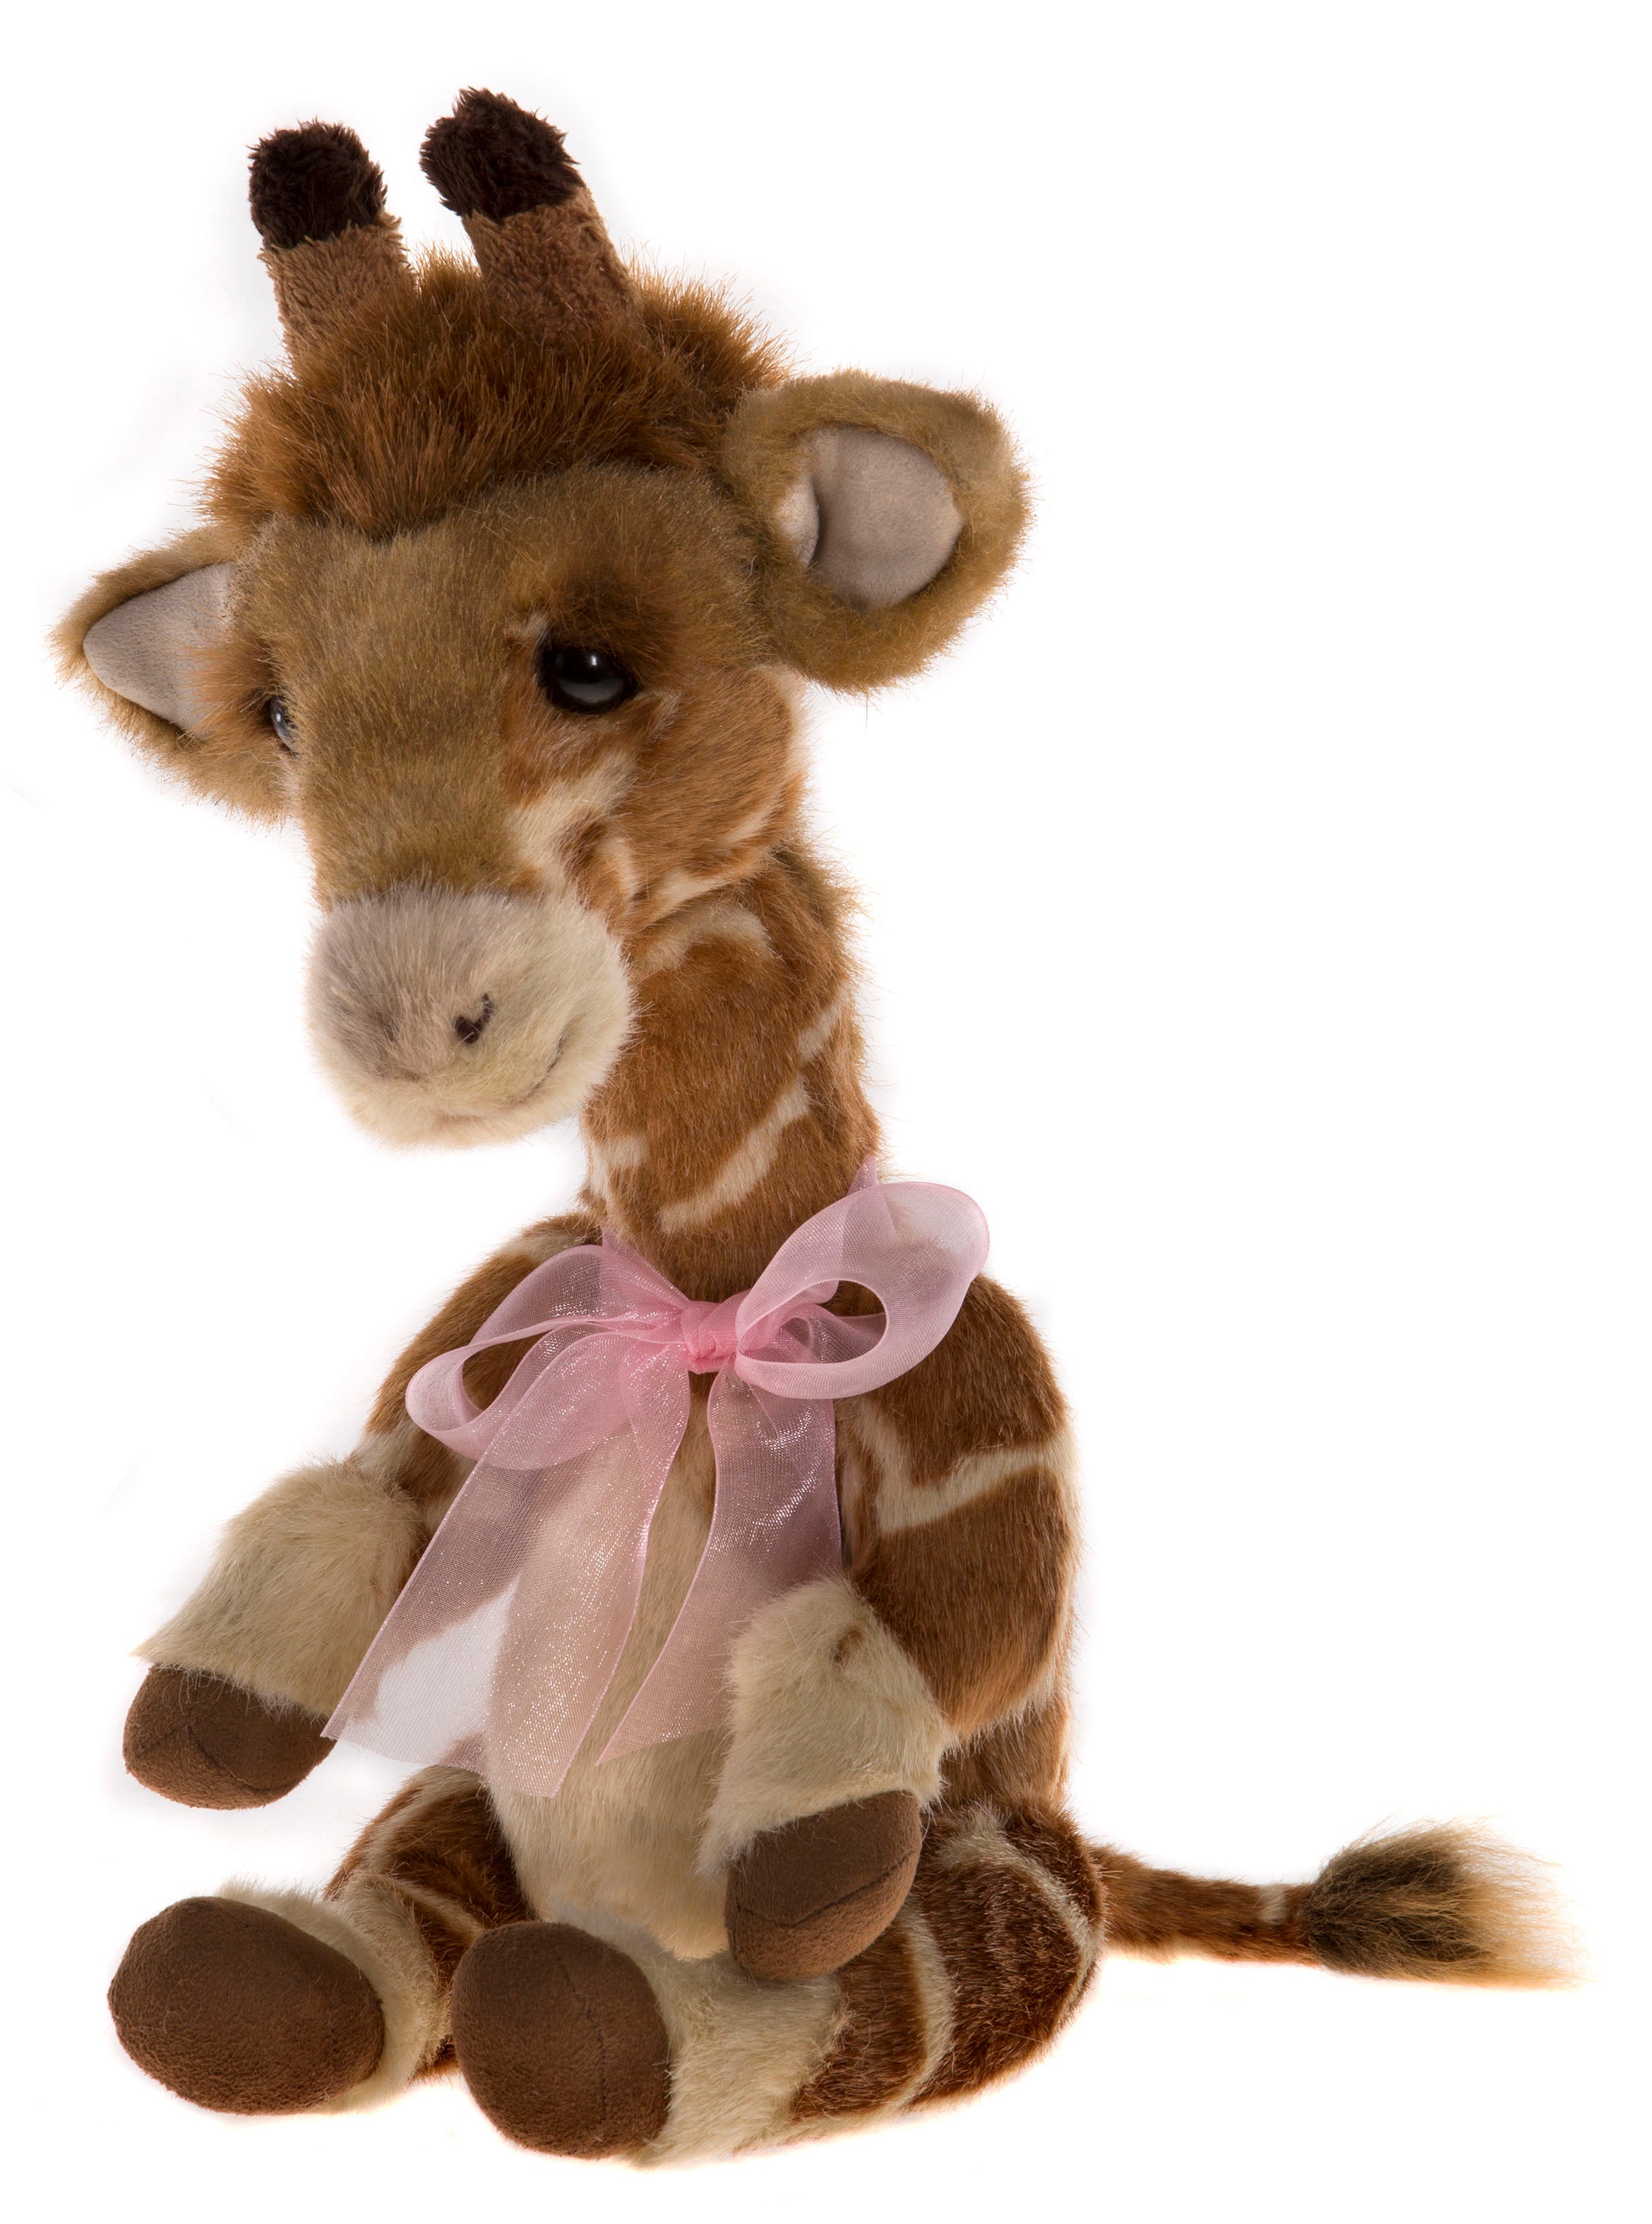 giraffe baby teddy